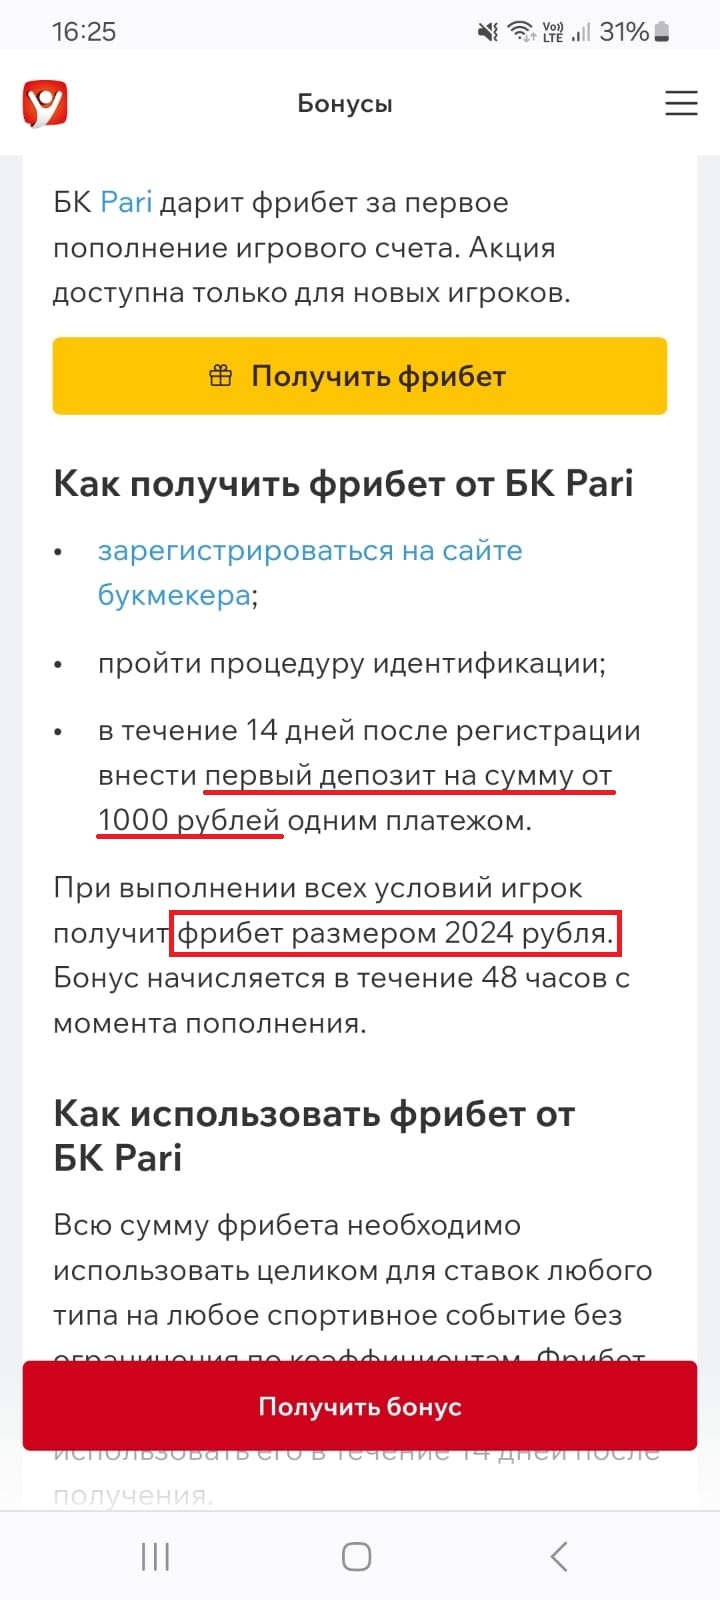 Фиксированный фрибет 2024 рубля за пополнение счёта от 1000 рублей в БК Pari